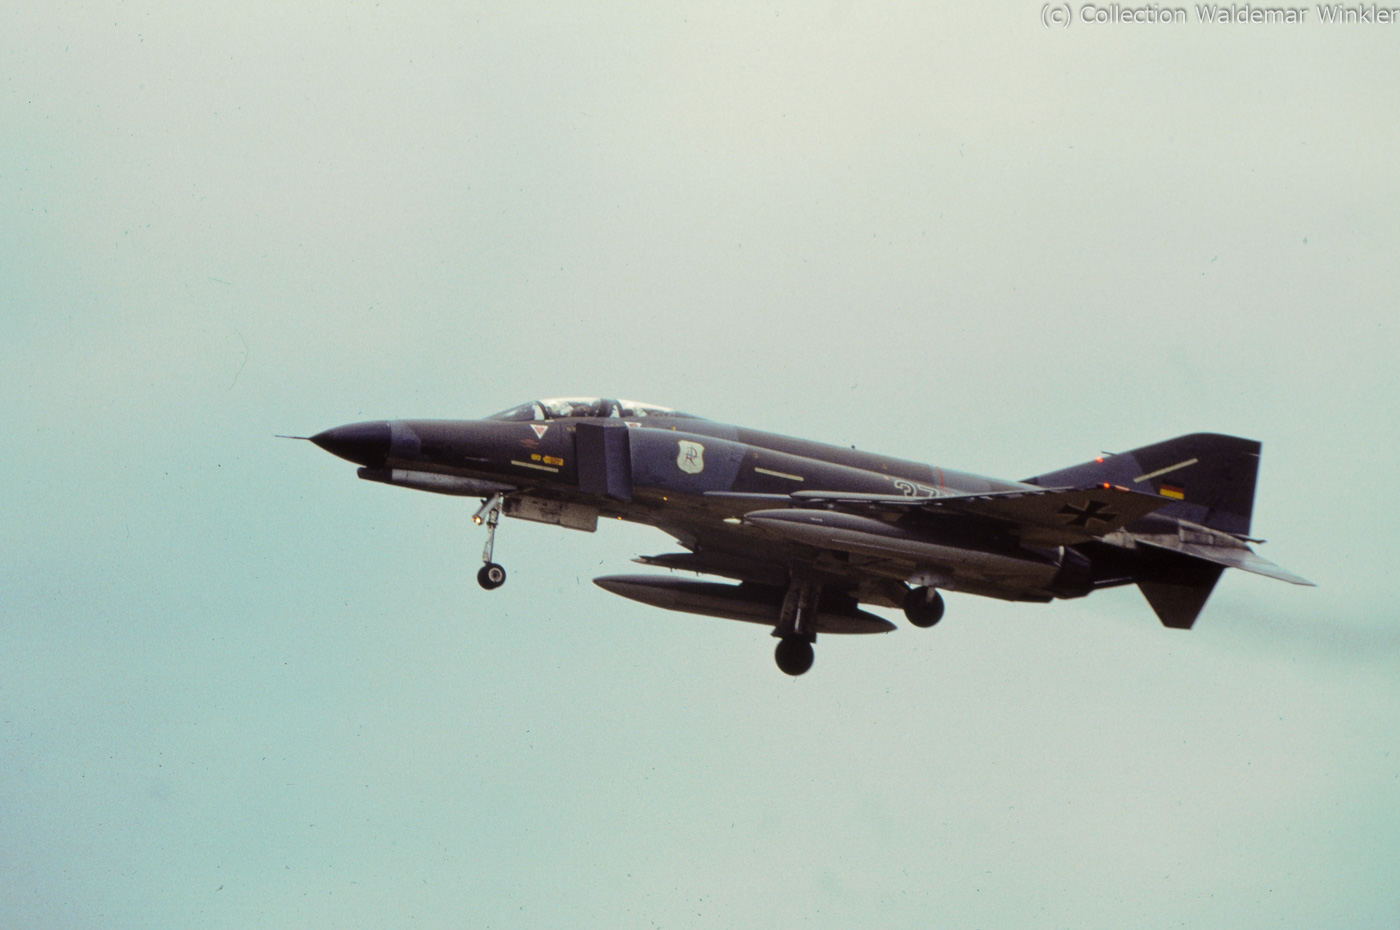 F-4_Phantom_II_DSC_1119.jpg